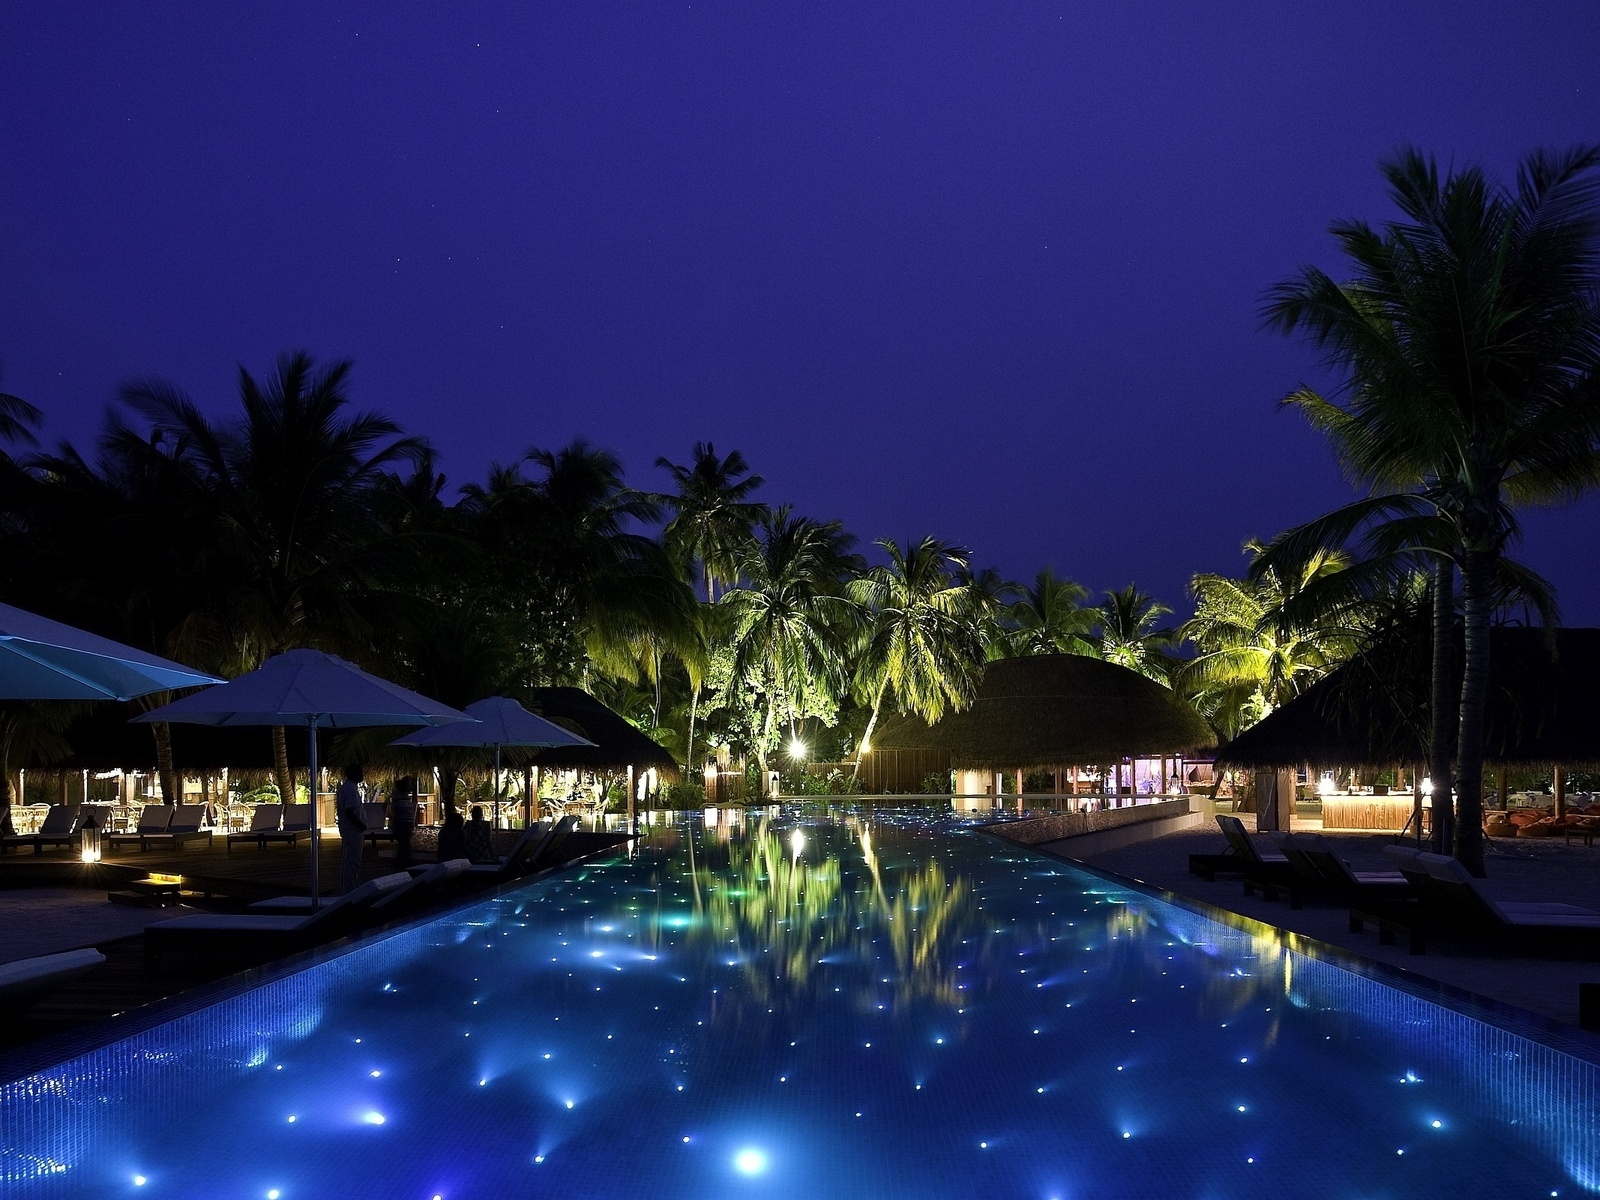 Resort Night View for 1600 x 1200 resolution